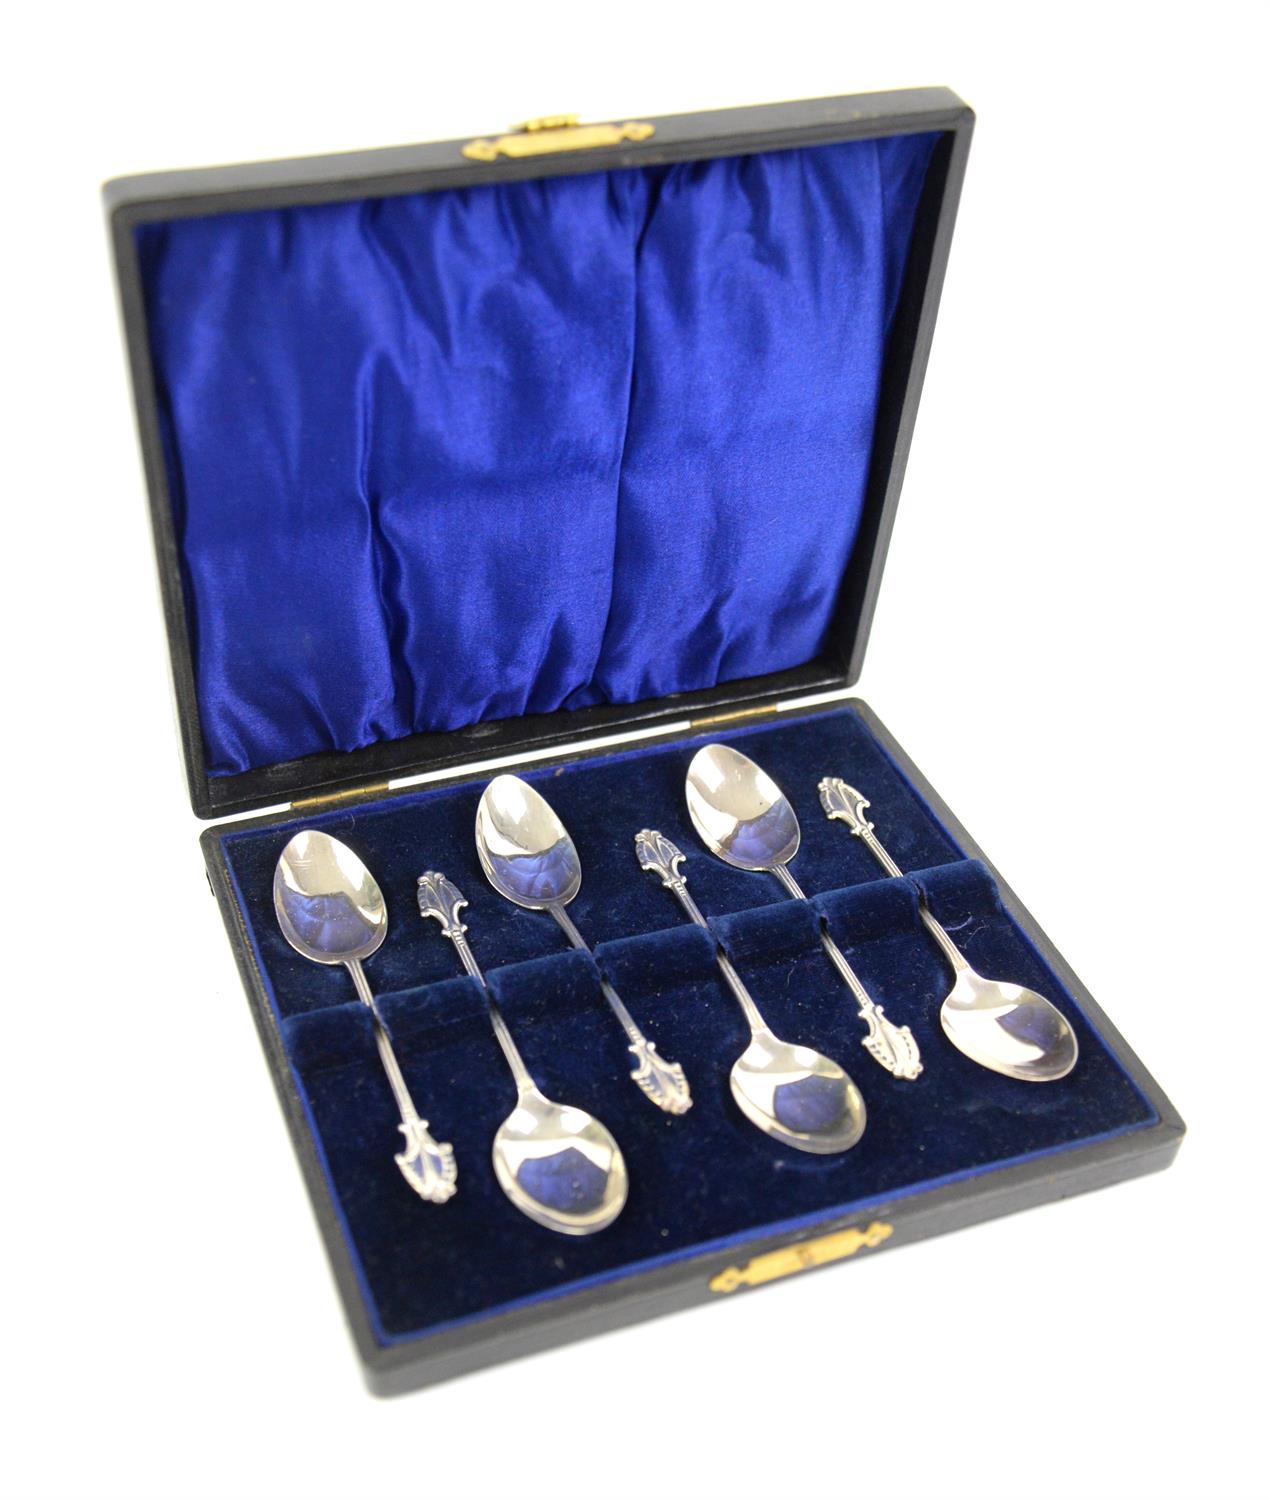 Cased set of silver spoons by AJB, Birmingham, 1907